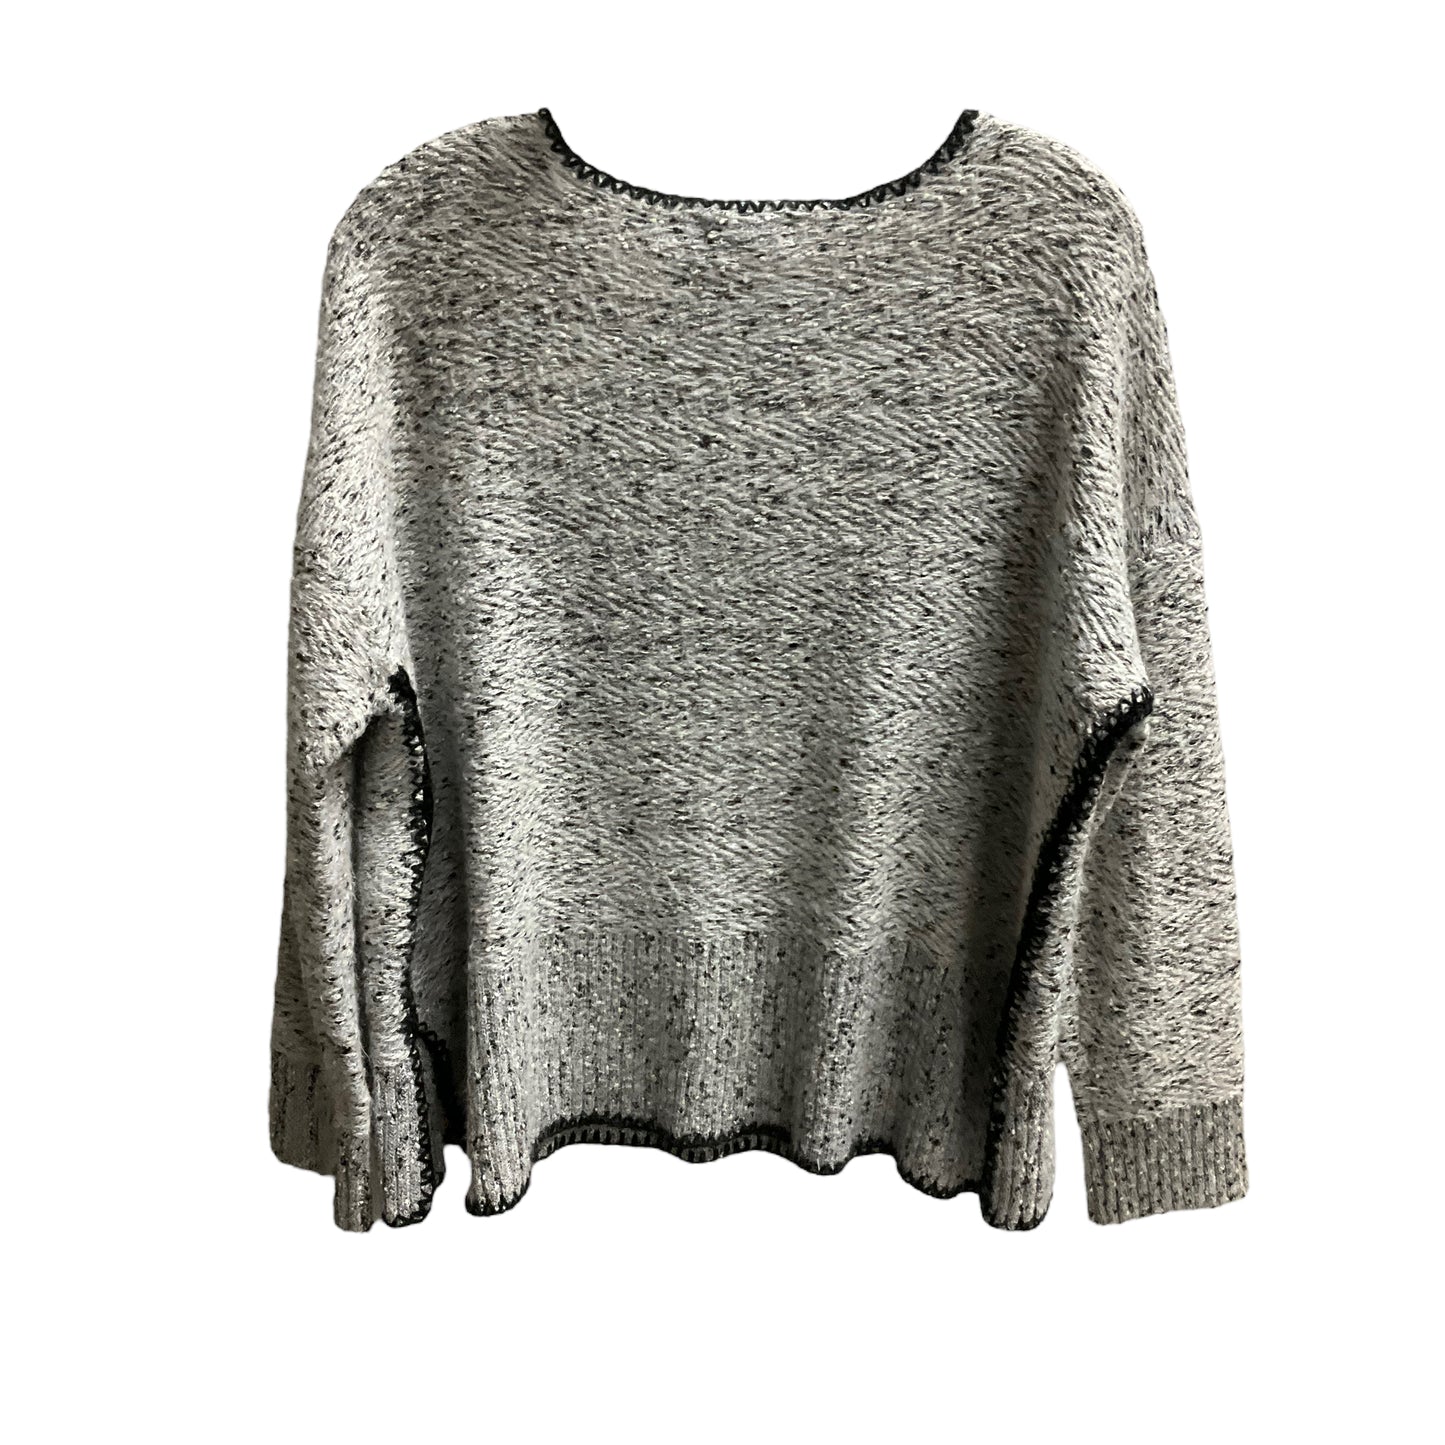 Sweater By Freeway  Size: M